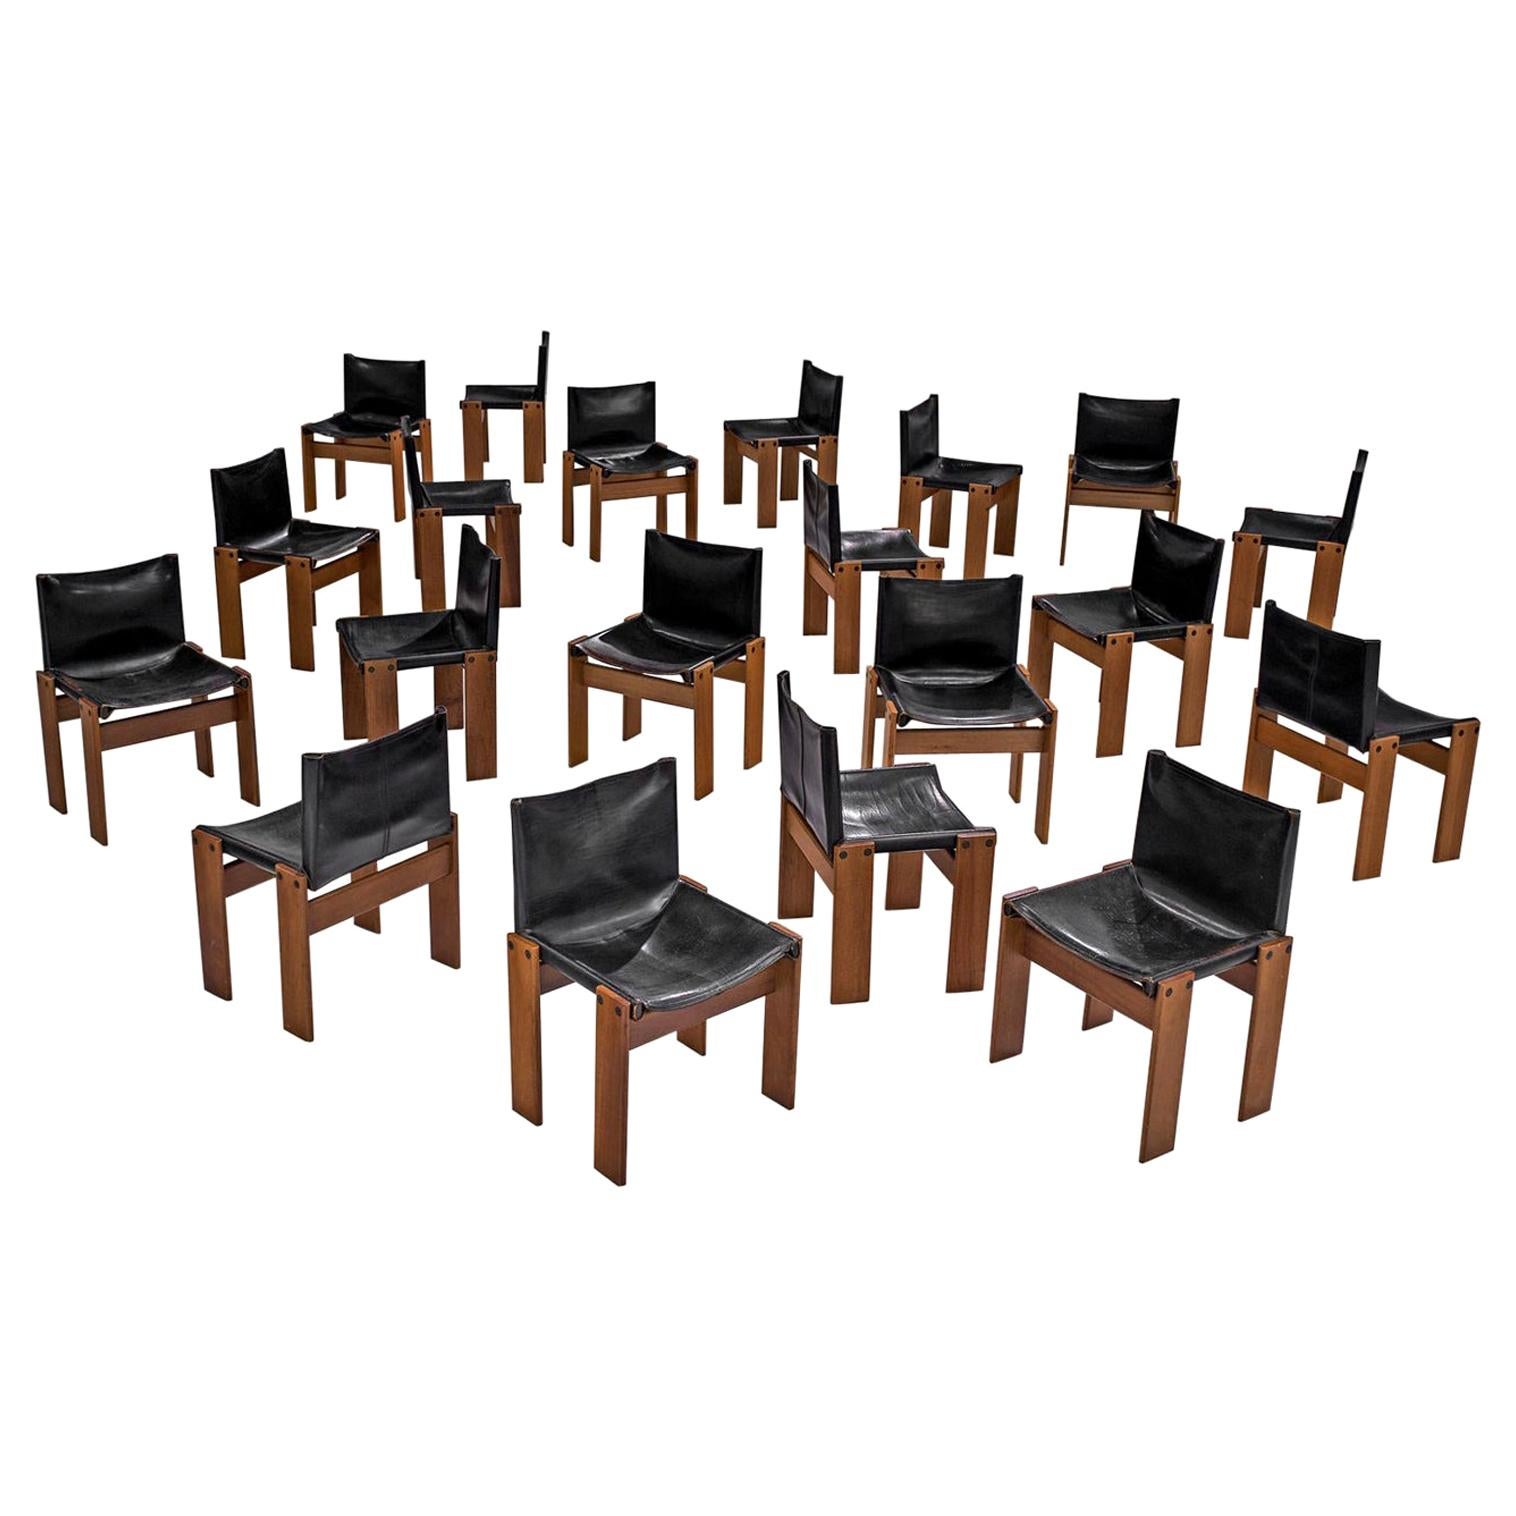 Tobia & Afra Scarpa for Molteni Twenty 'Monk' Chairs